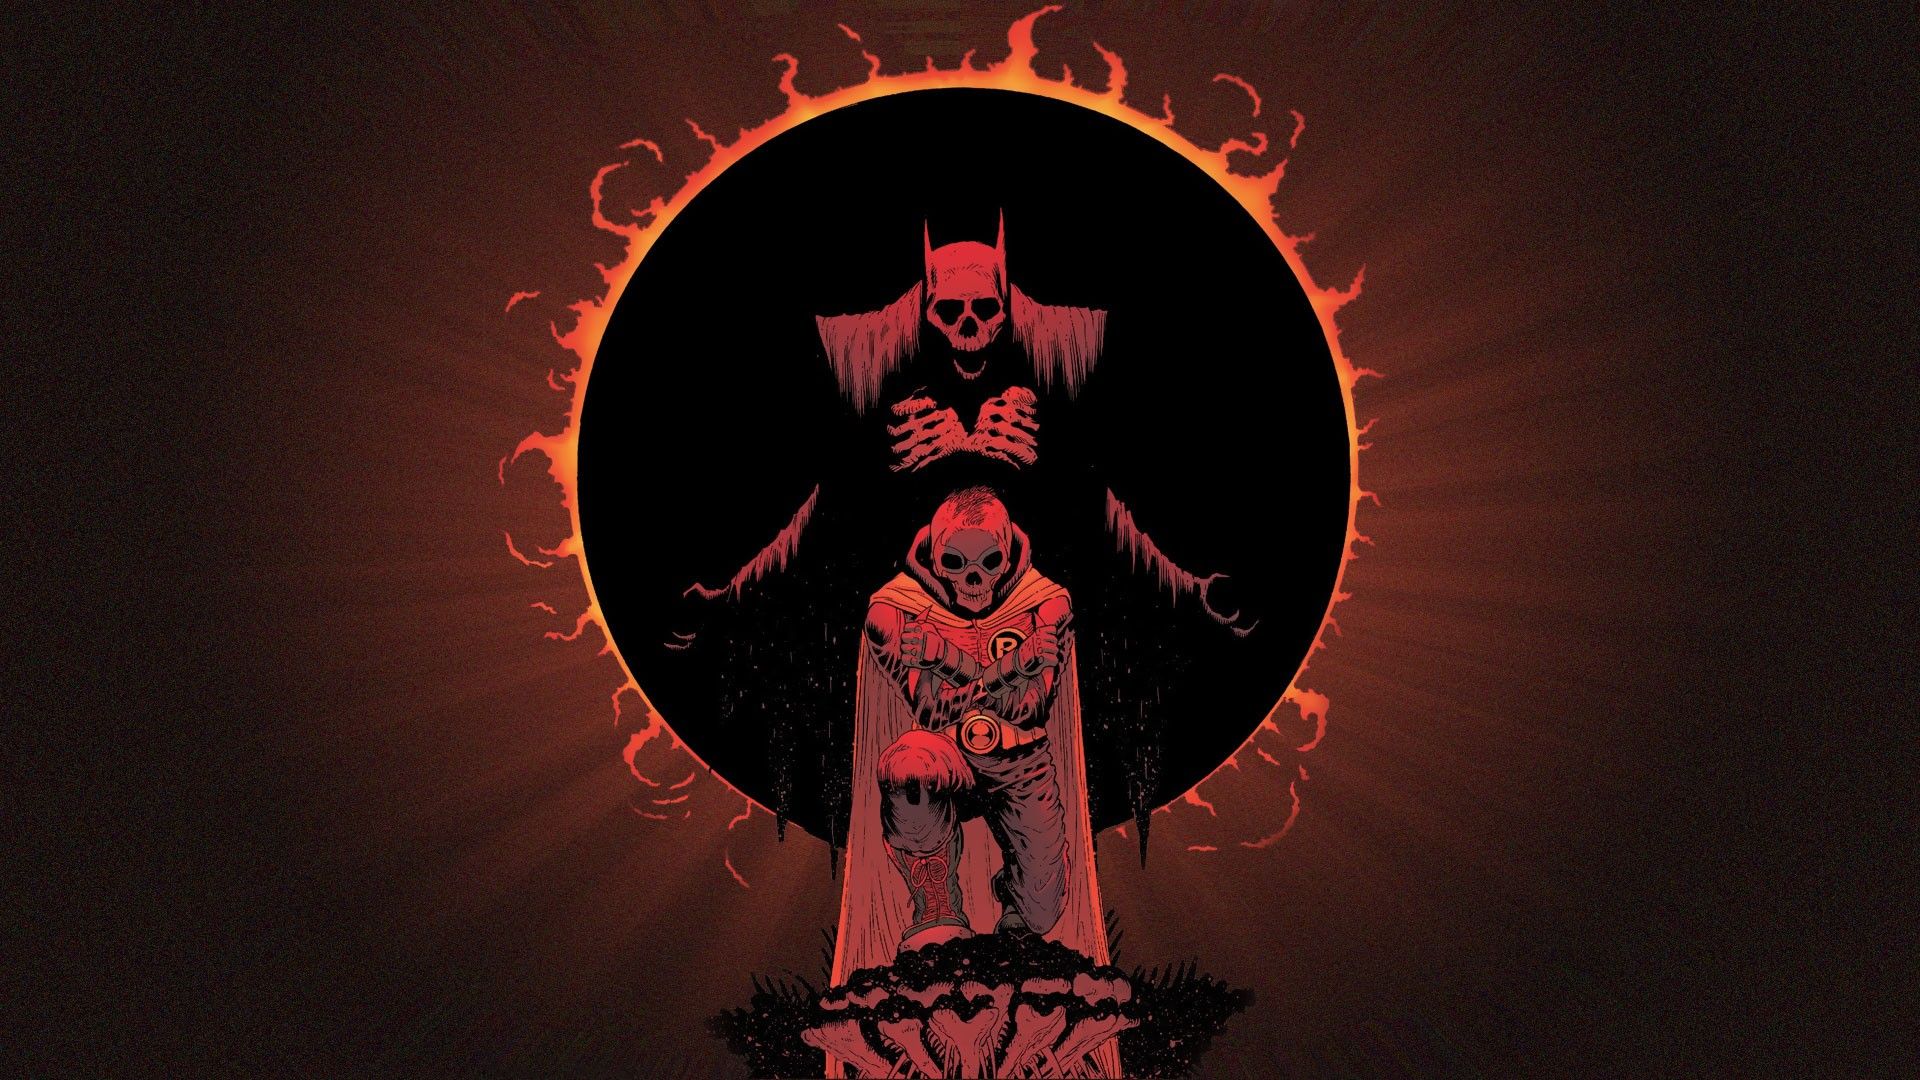 Subscribers just in time for the Halloween season! (skeletal) Batman & Robin [1920 x 1080]